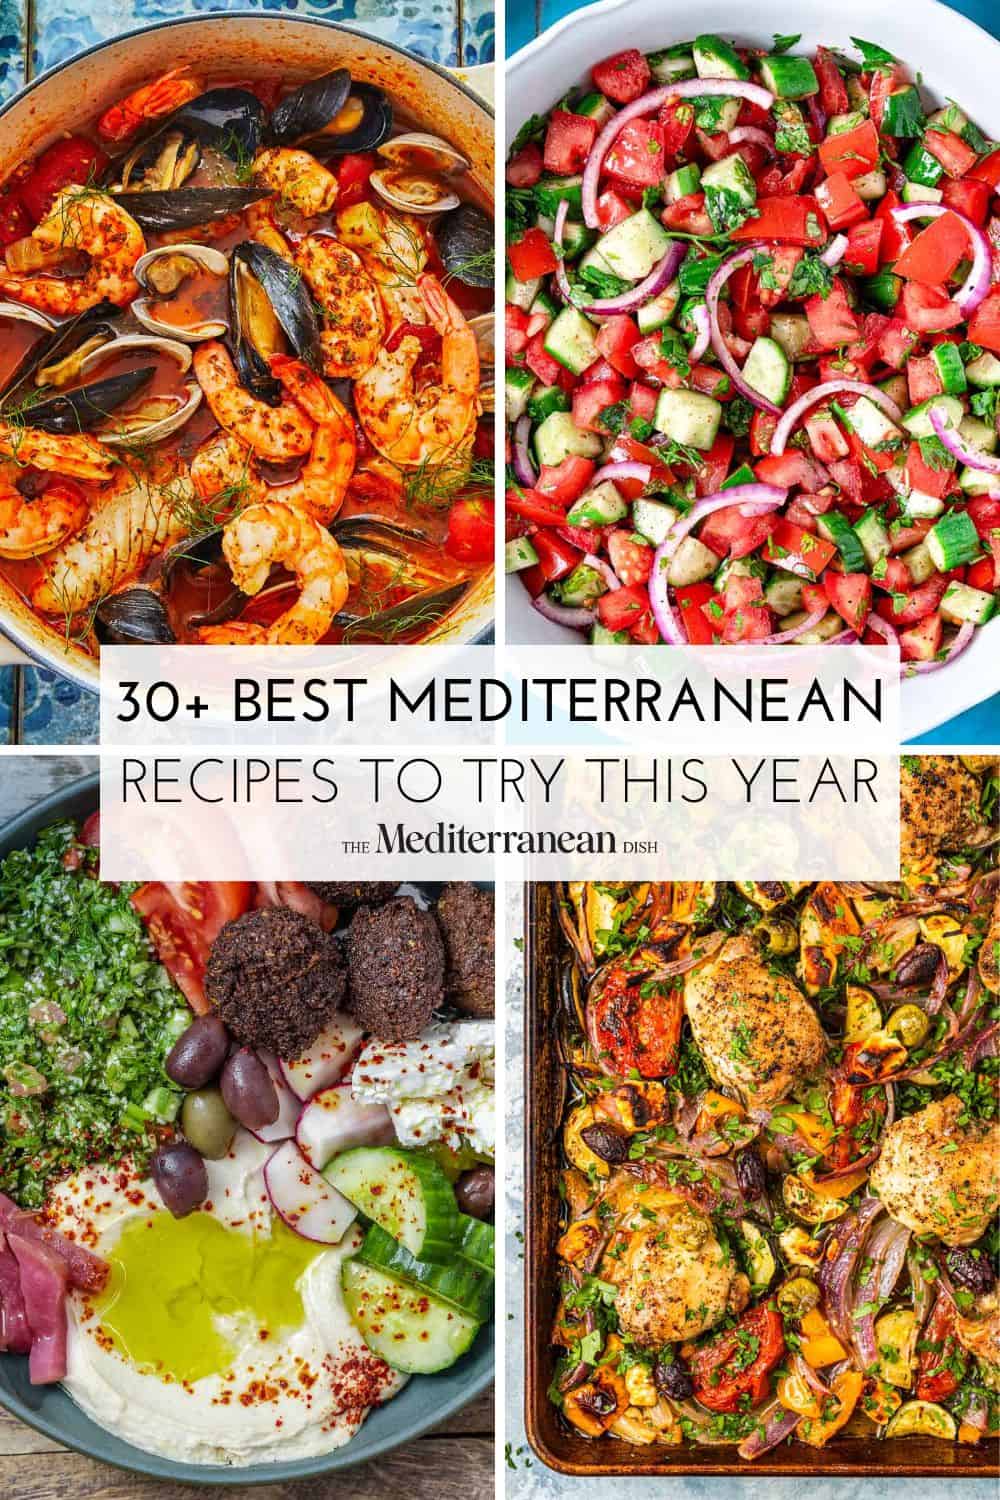 https://www.themediterraneandish.com/wp-content/uploads/2022/12/Top-Mediterranean-Recipes-2023-Graphics-1.jpg